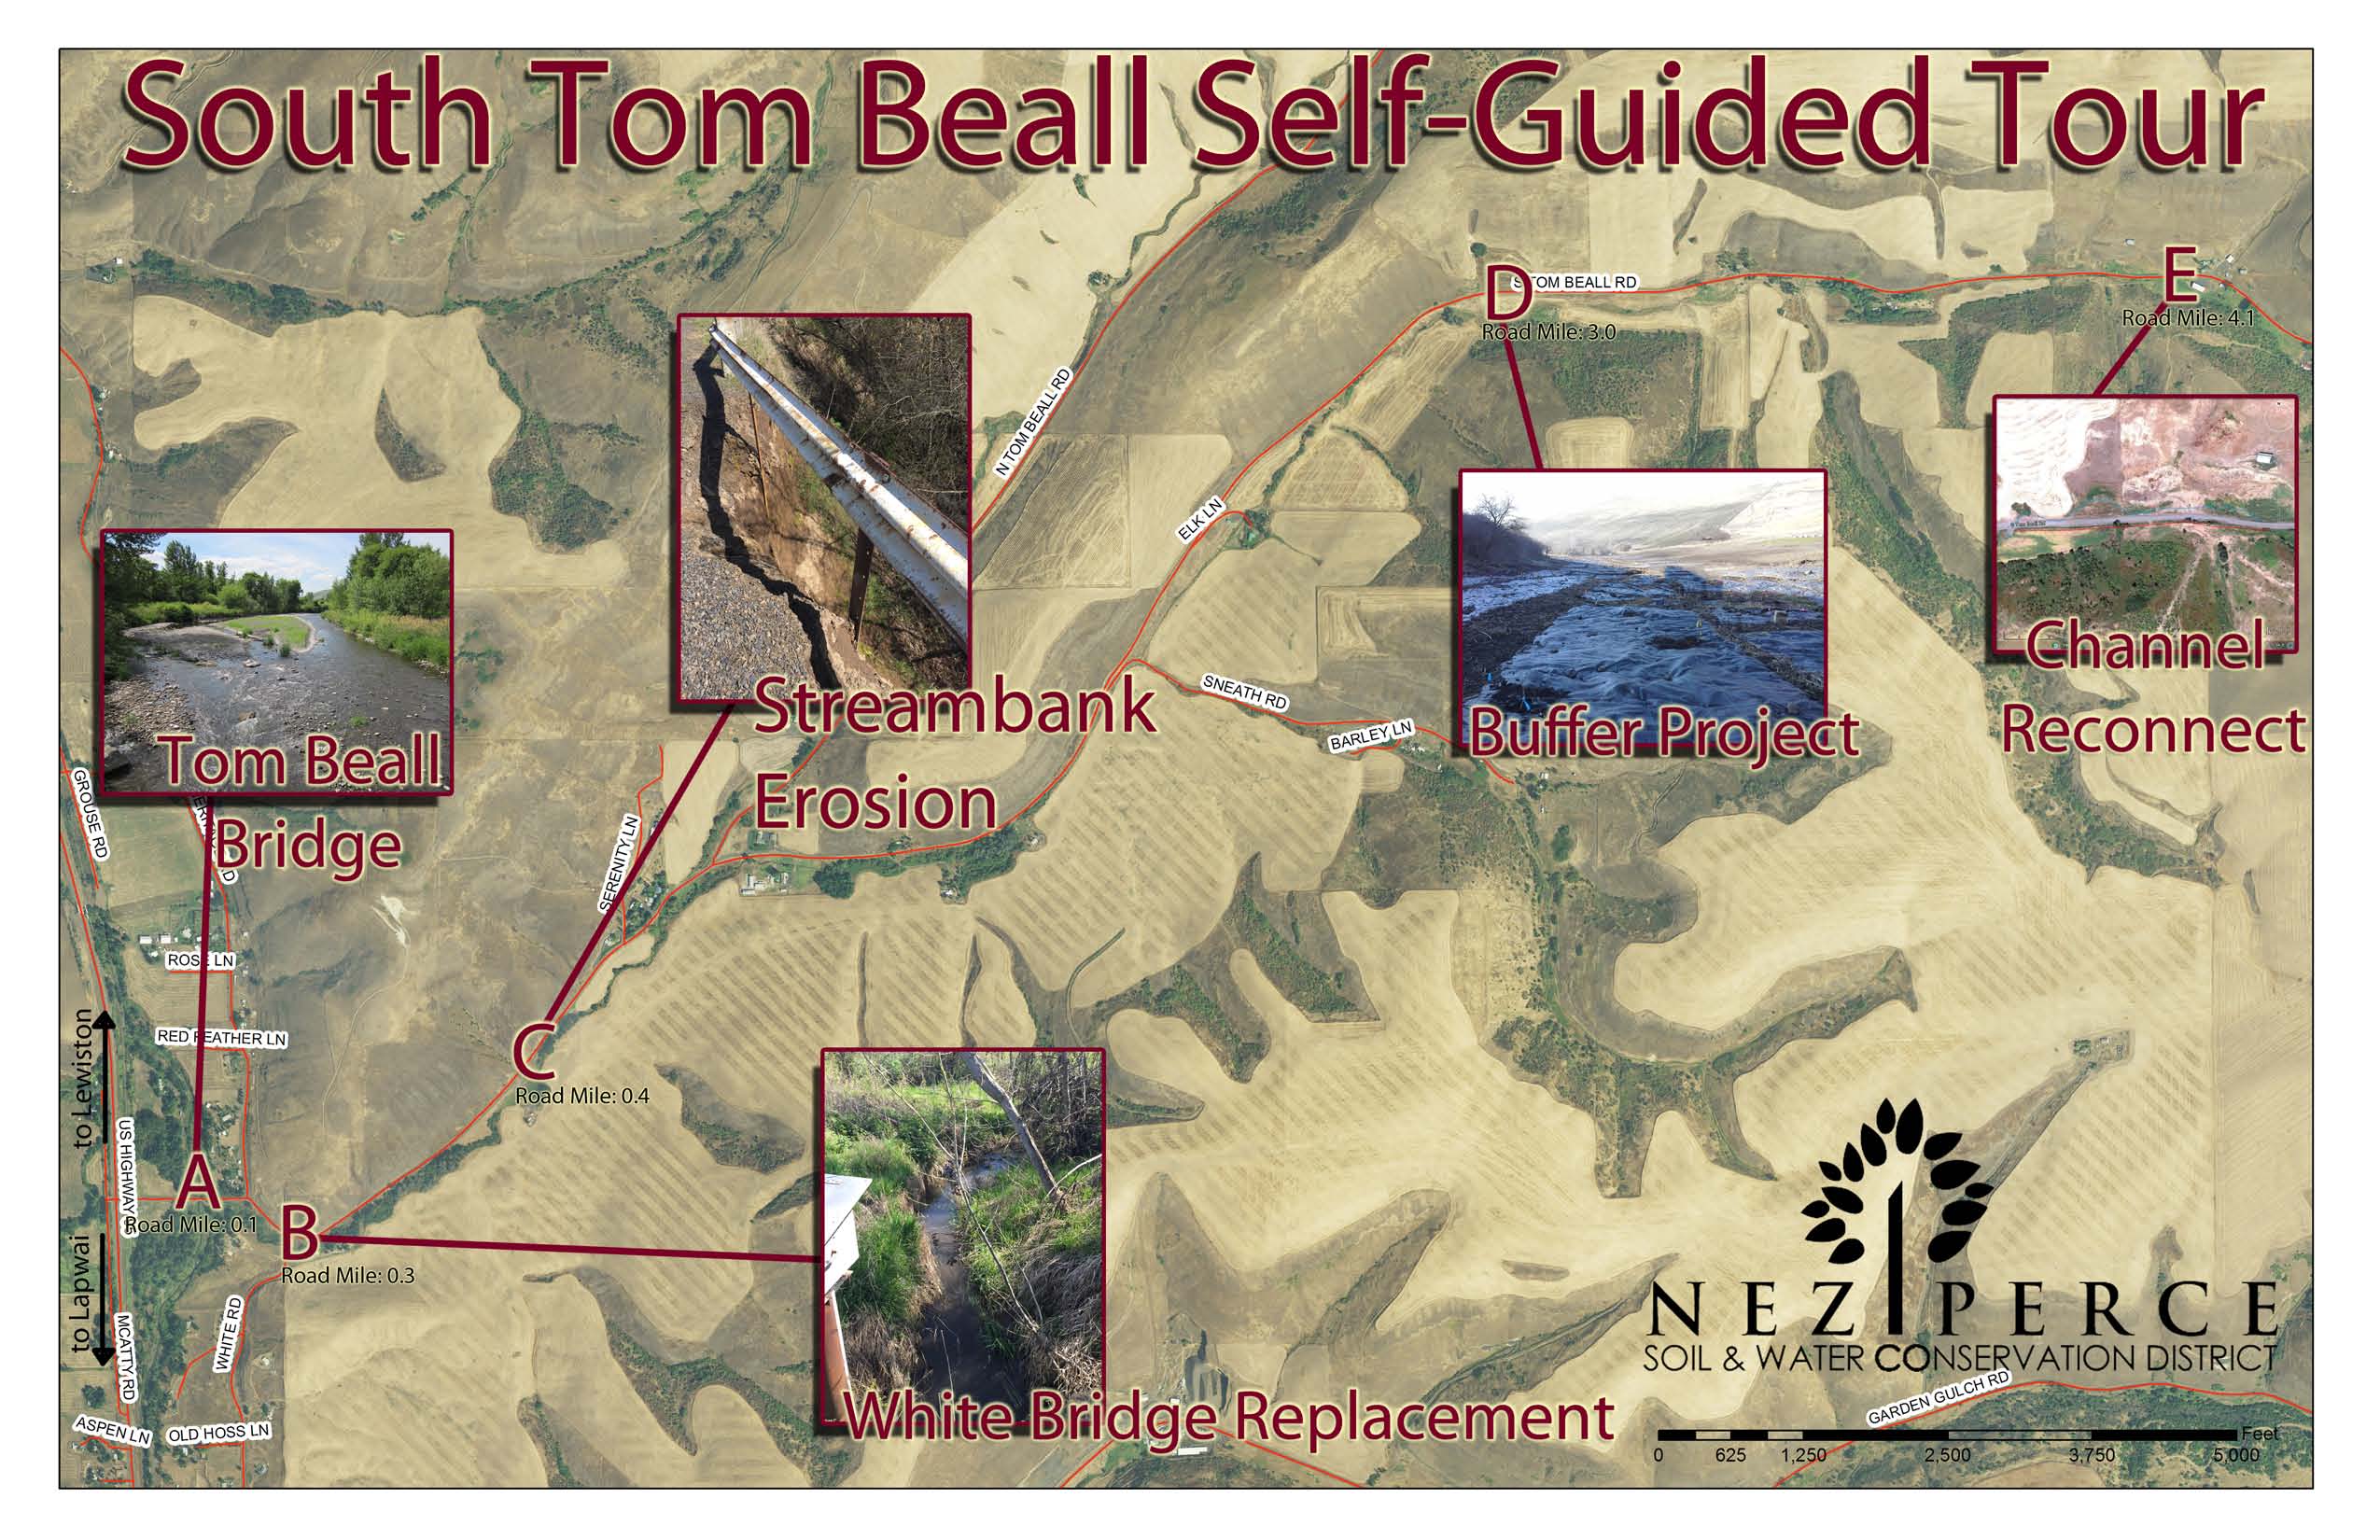 South Tom Beall Tour Map